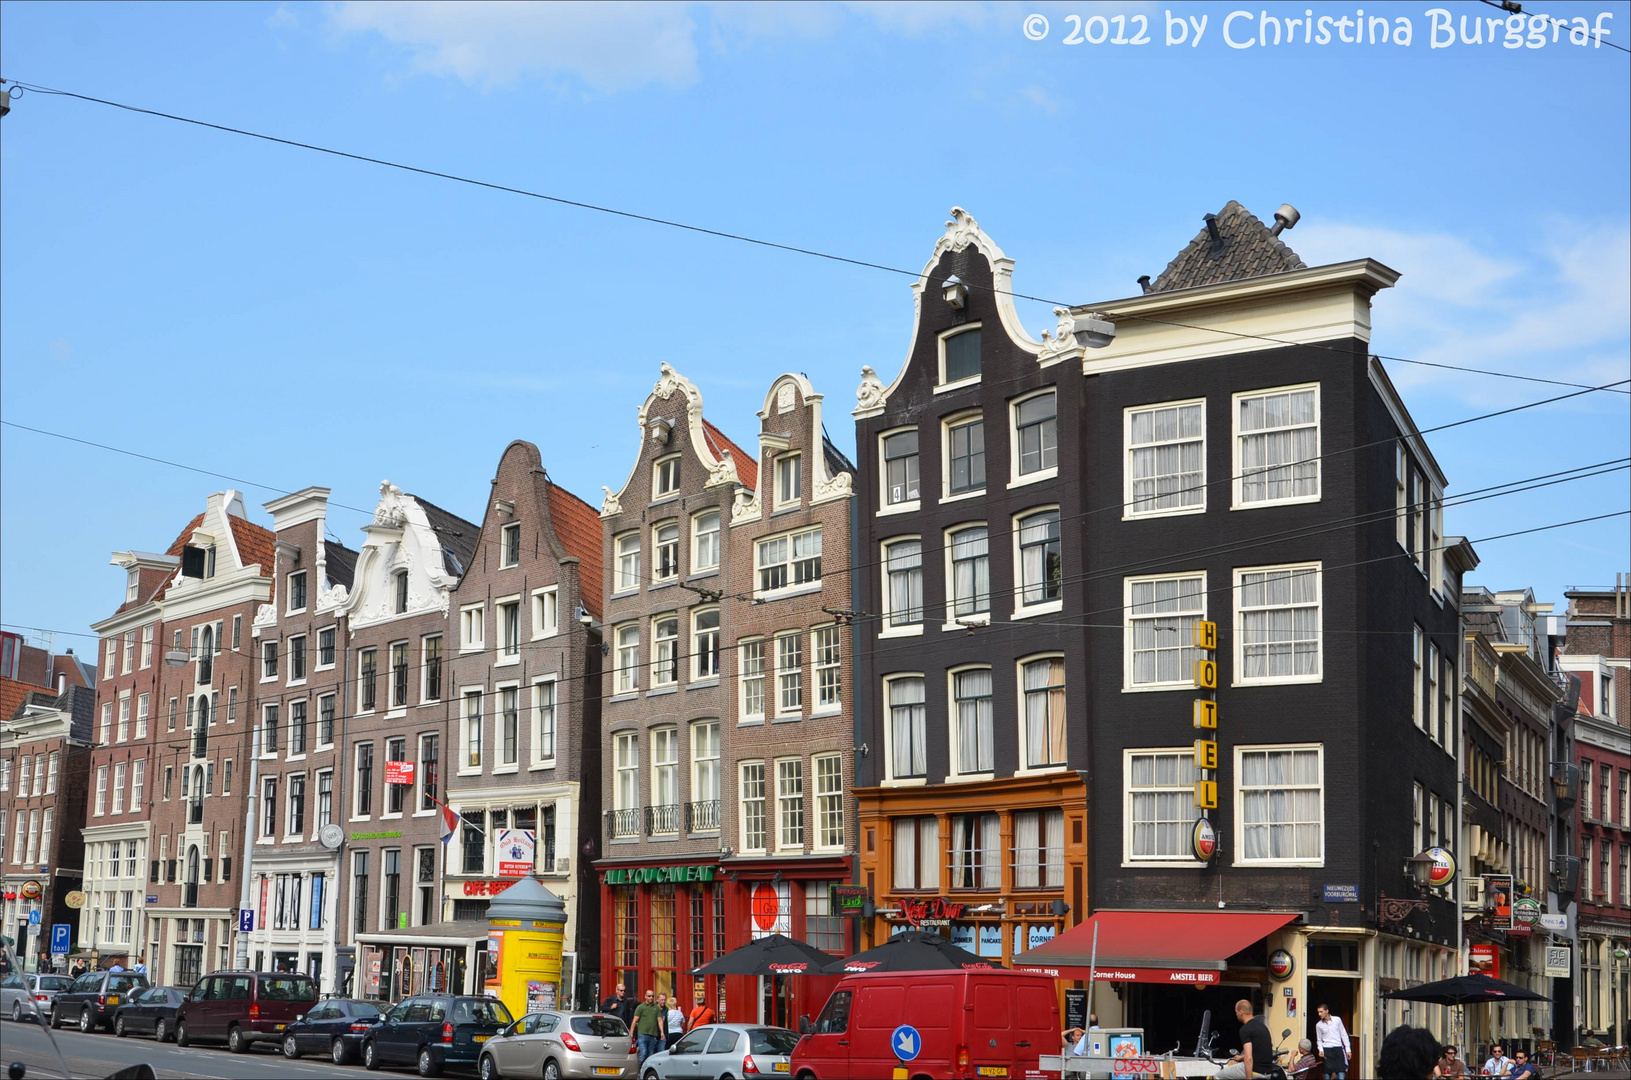 Amsterdam II